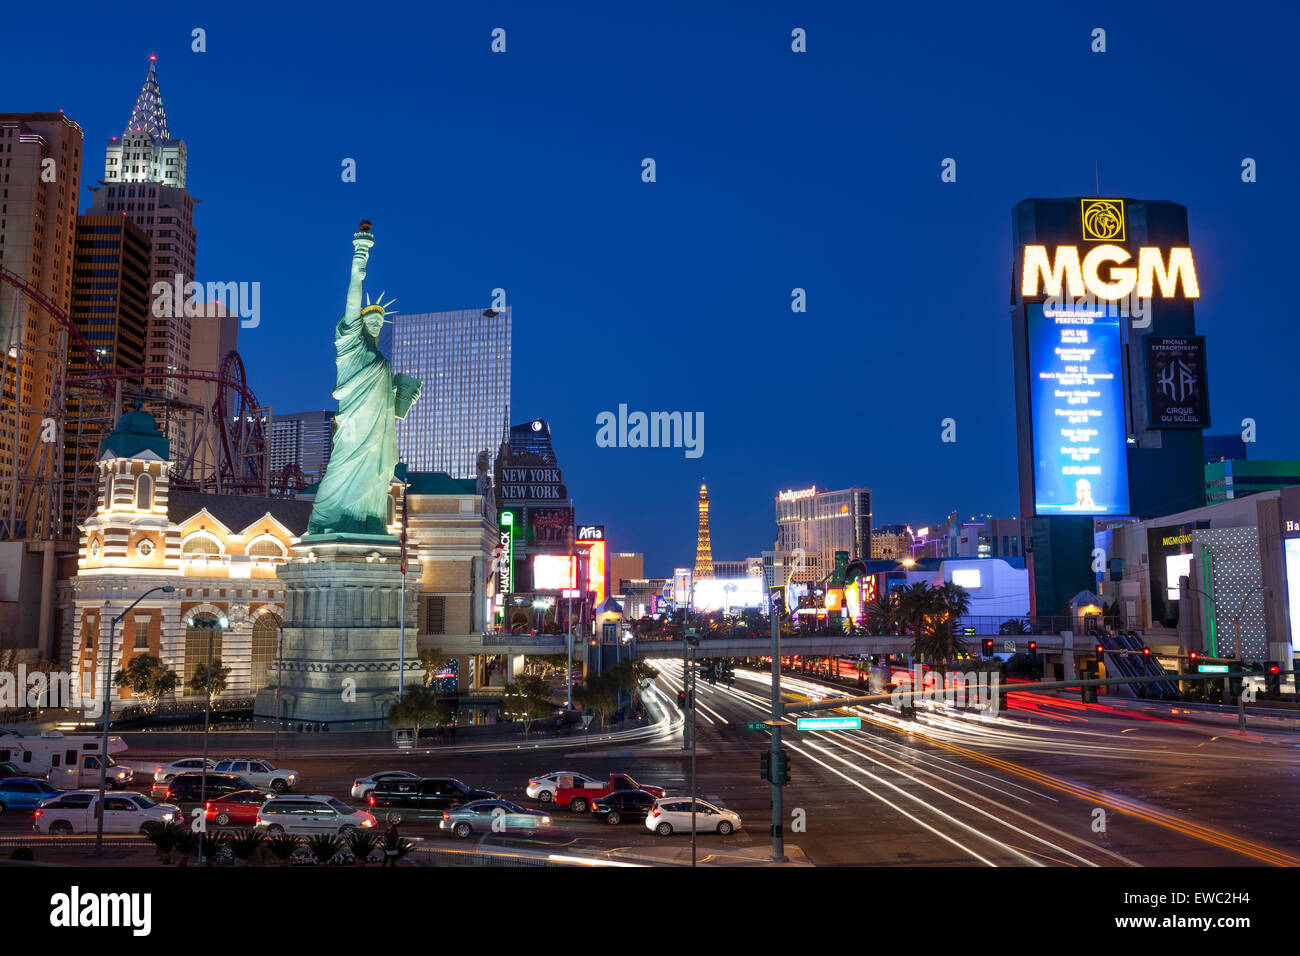 Las Vegas Boulevard 'The Strip' long exposure night shot. View of MGM Grand Hotel and New York New York Hotel Stock Photo